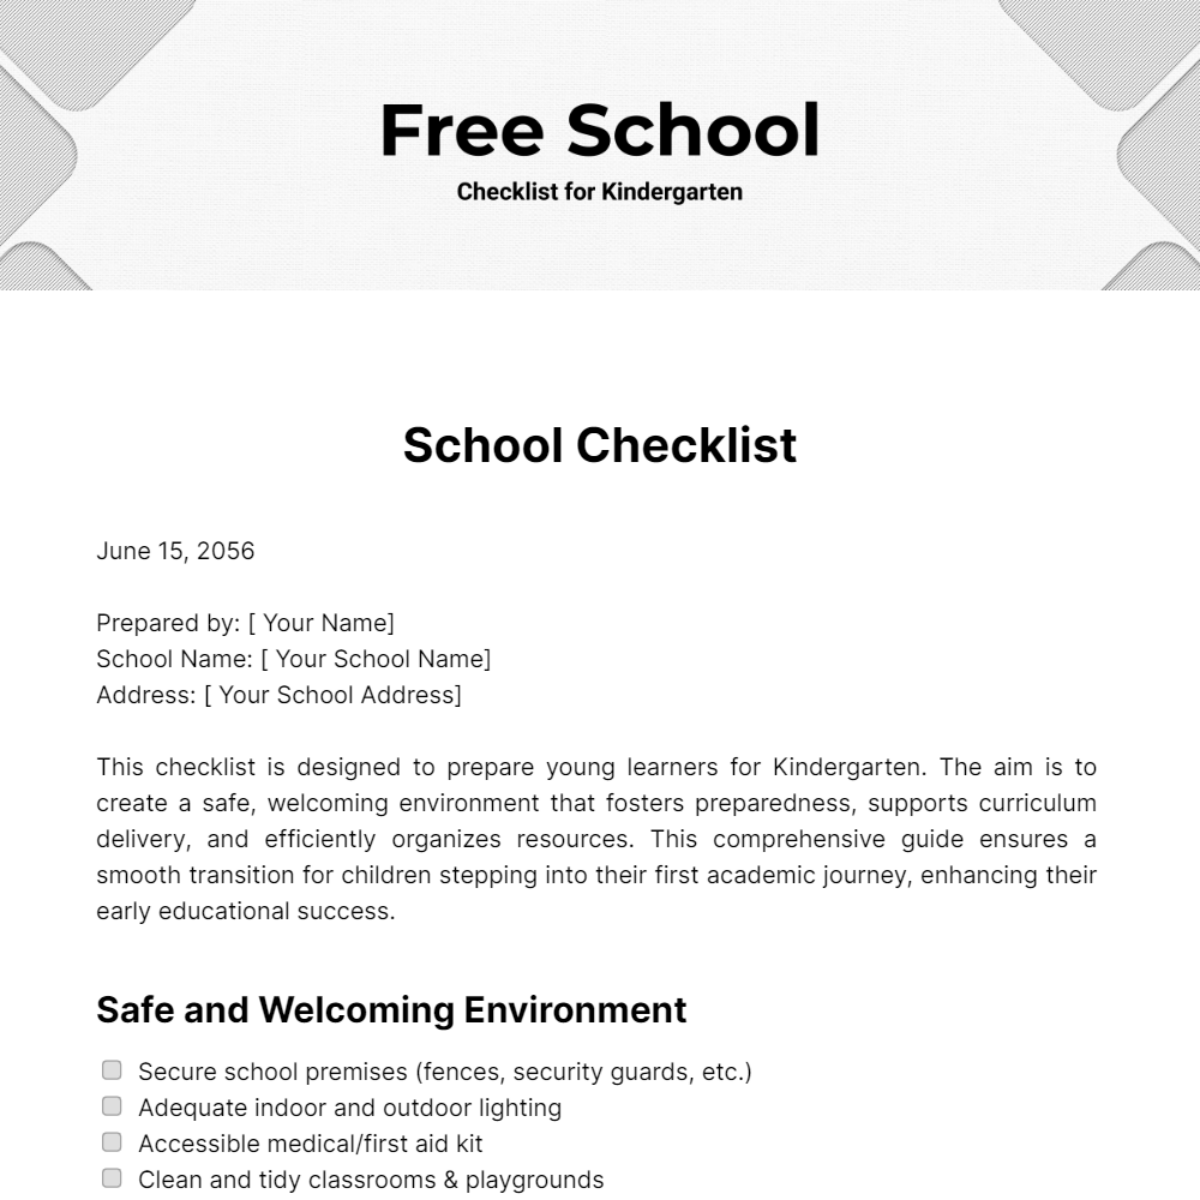 School Checklist for Kindergarten Template